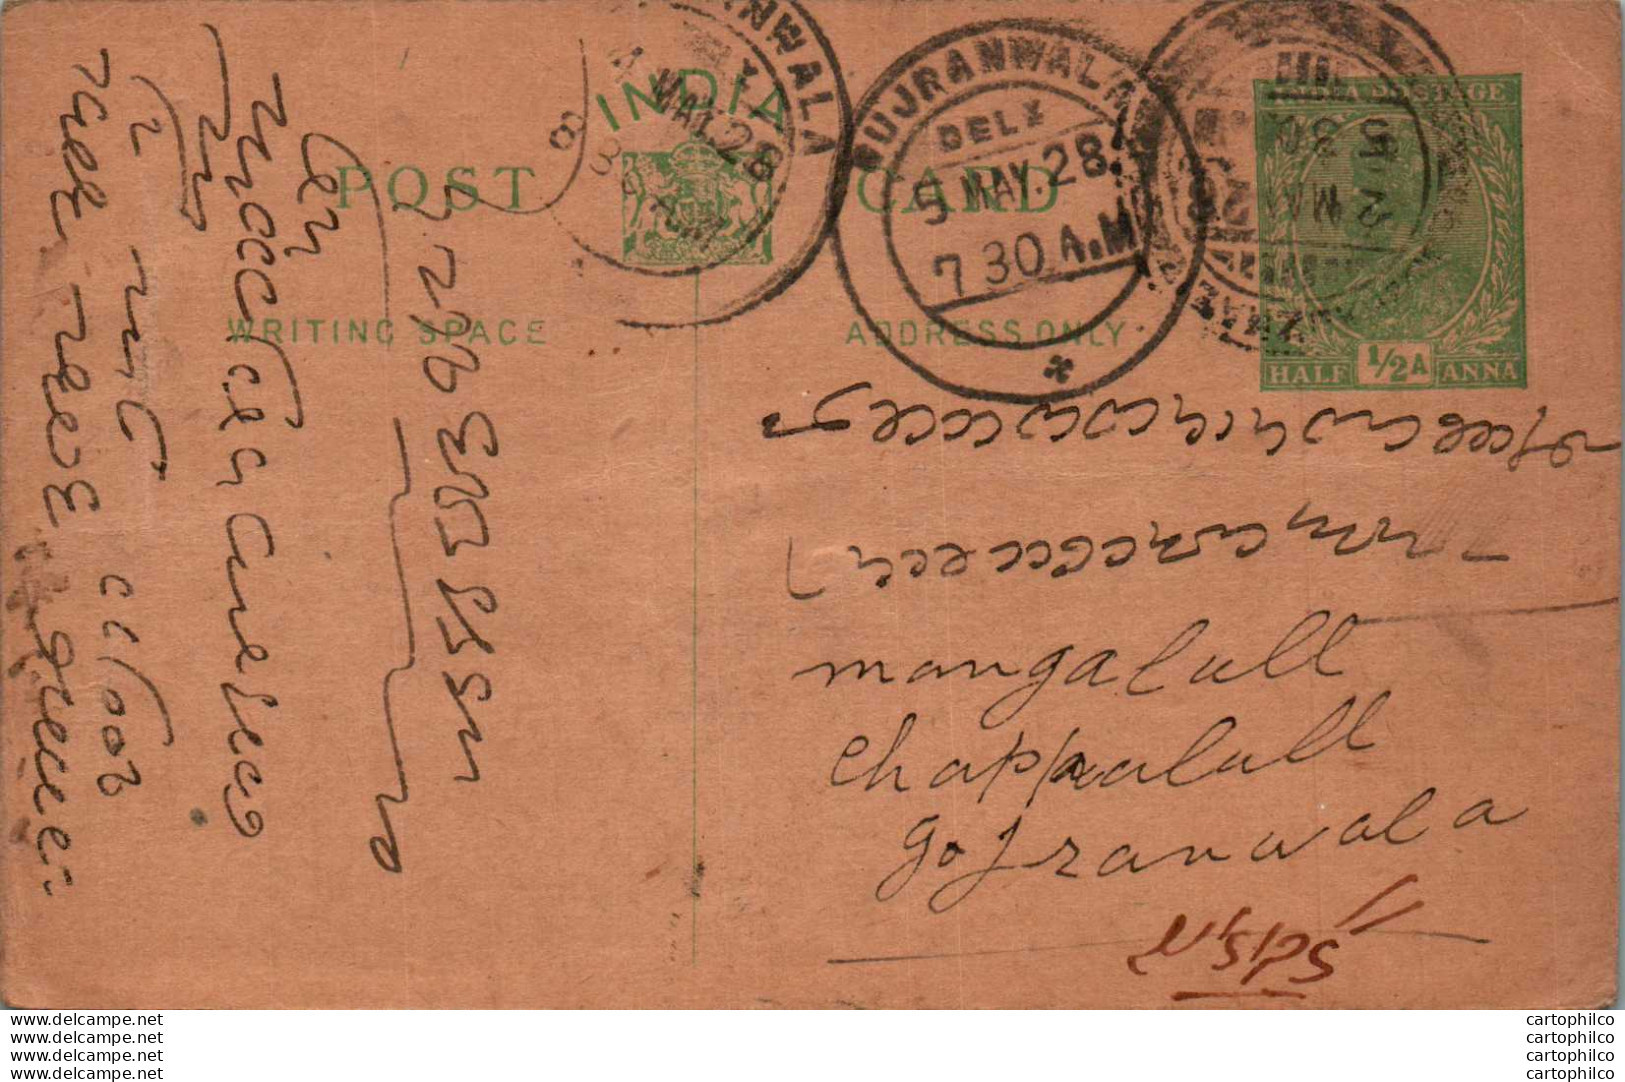 India Postal Stationery George V 1/2A Gujranwala Cds - Ansichtskarten